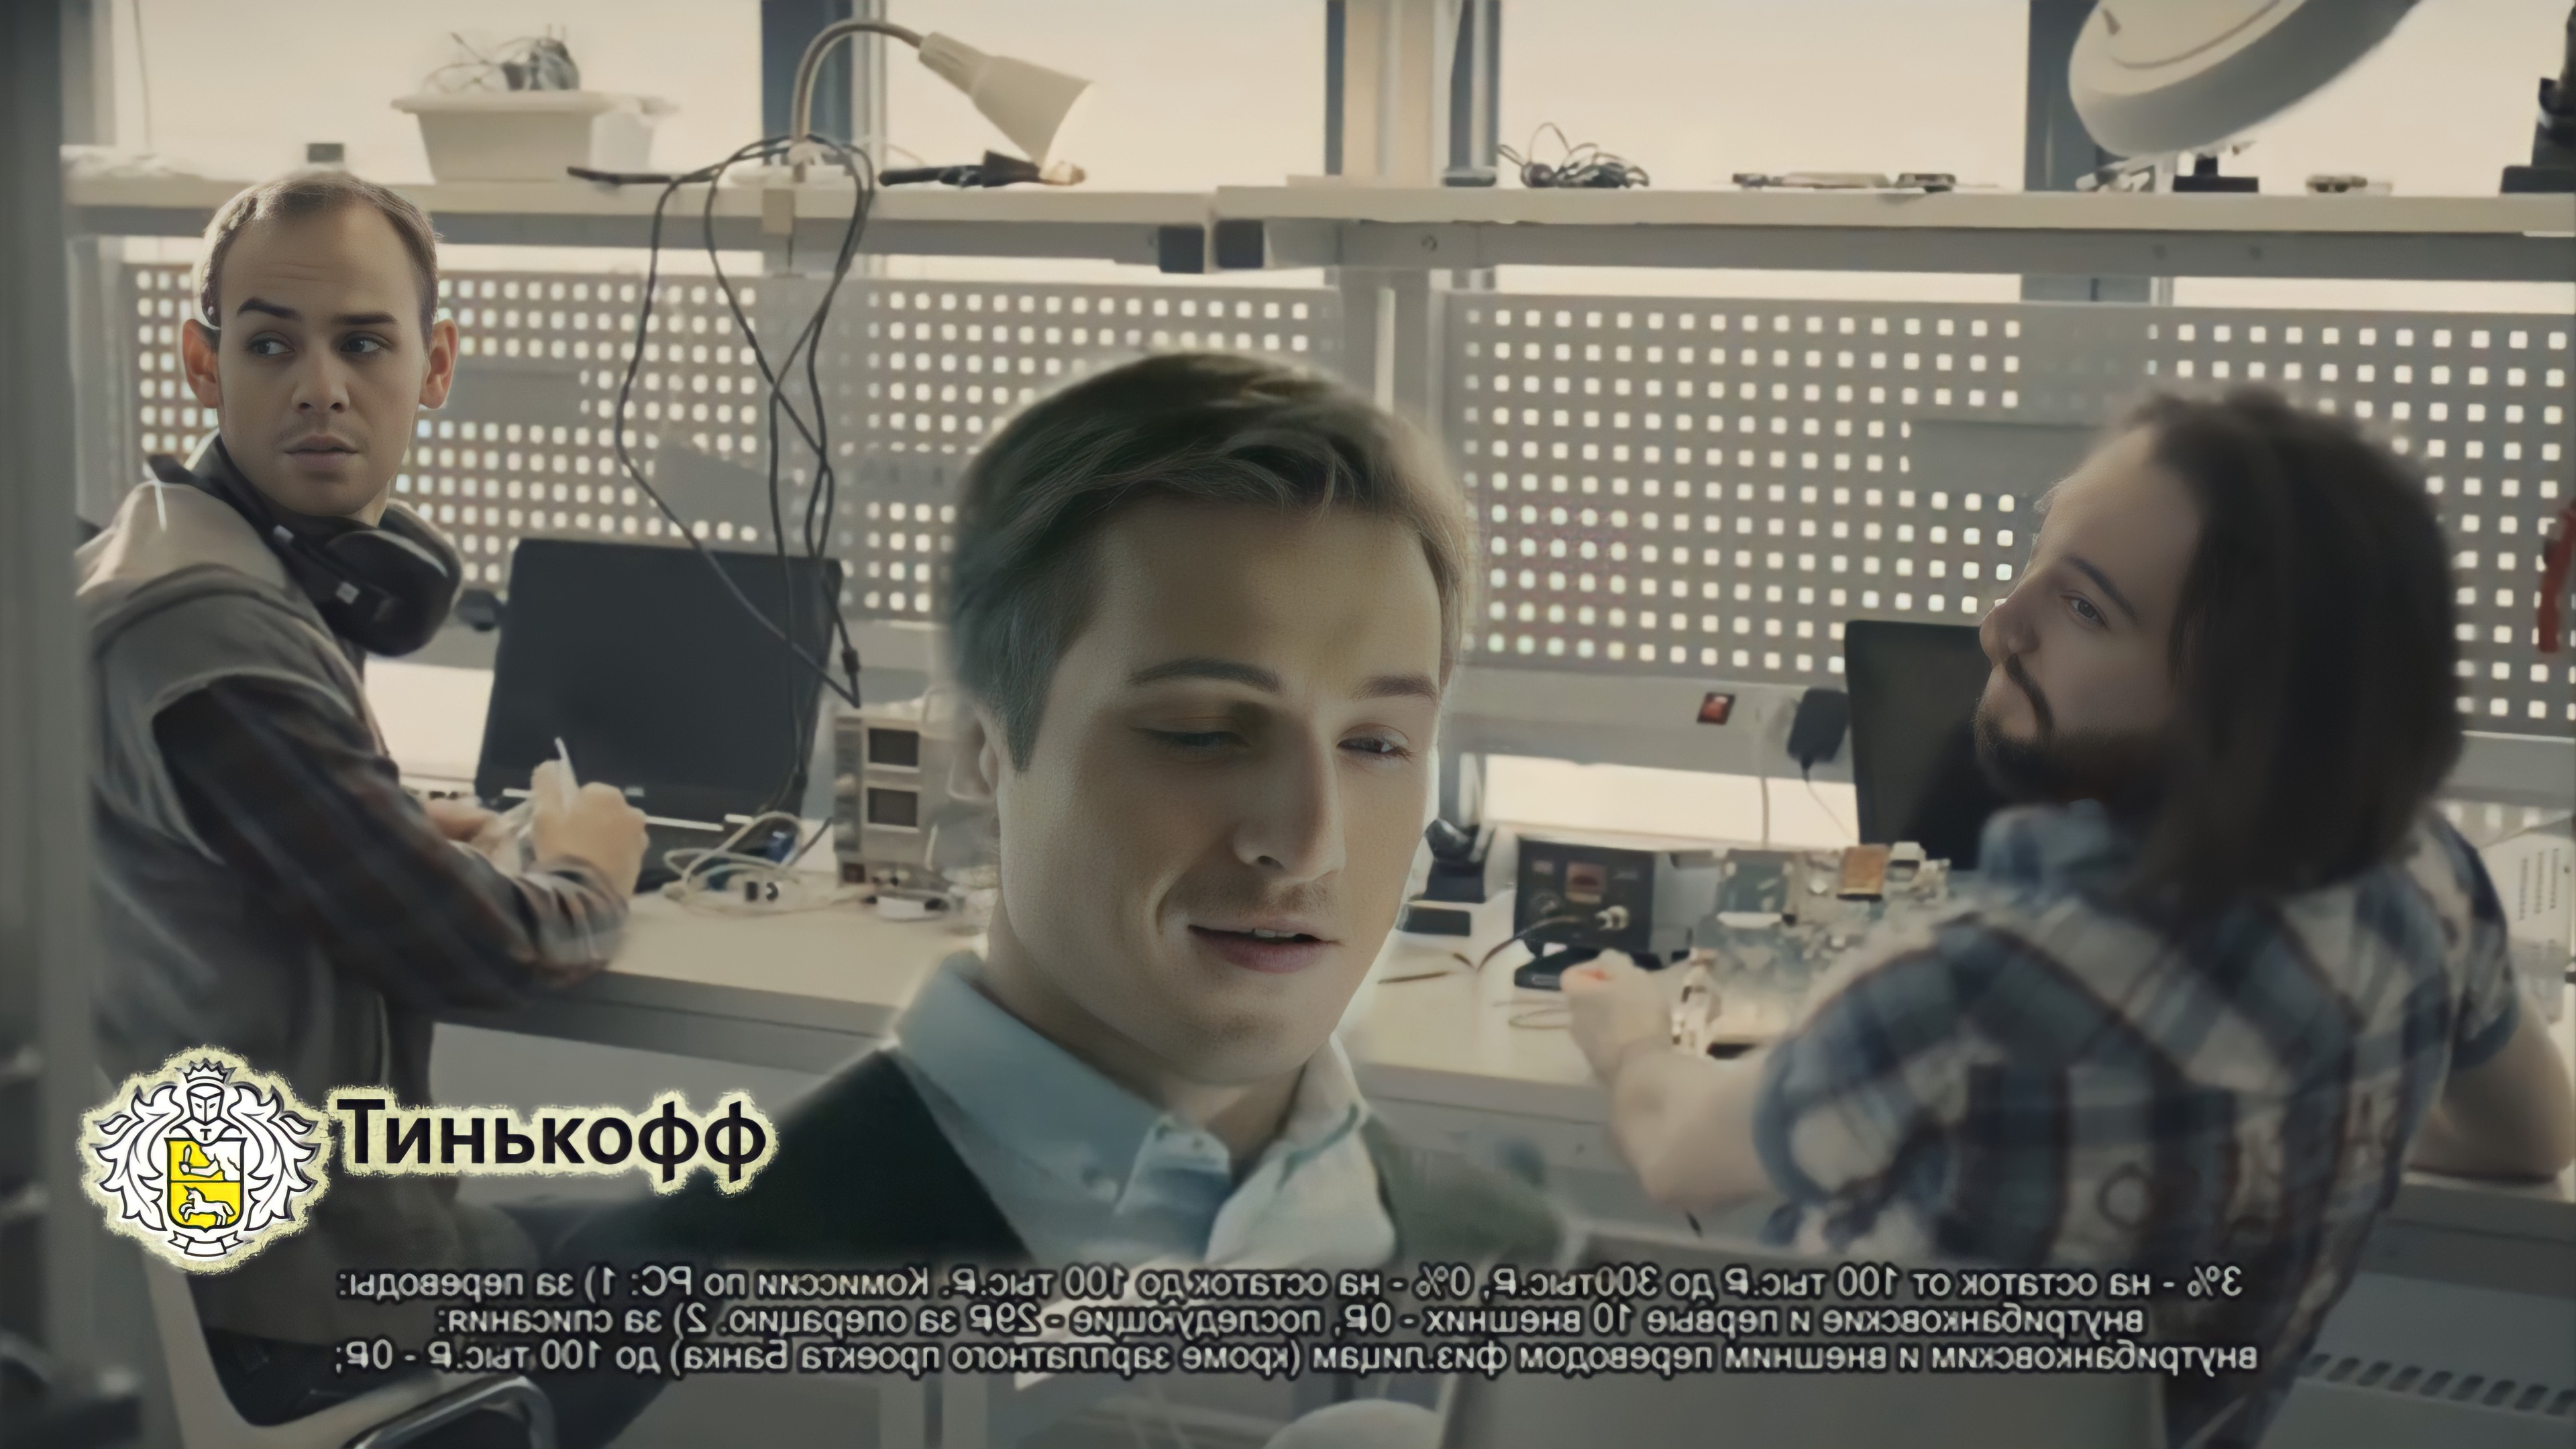 Реклама тинькофф актеры мужчины фото и фамилии